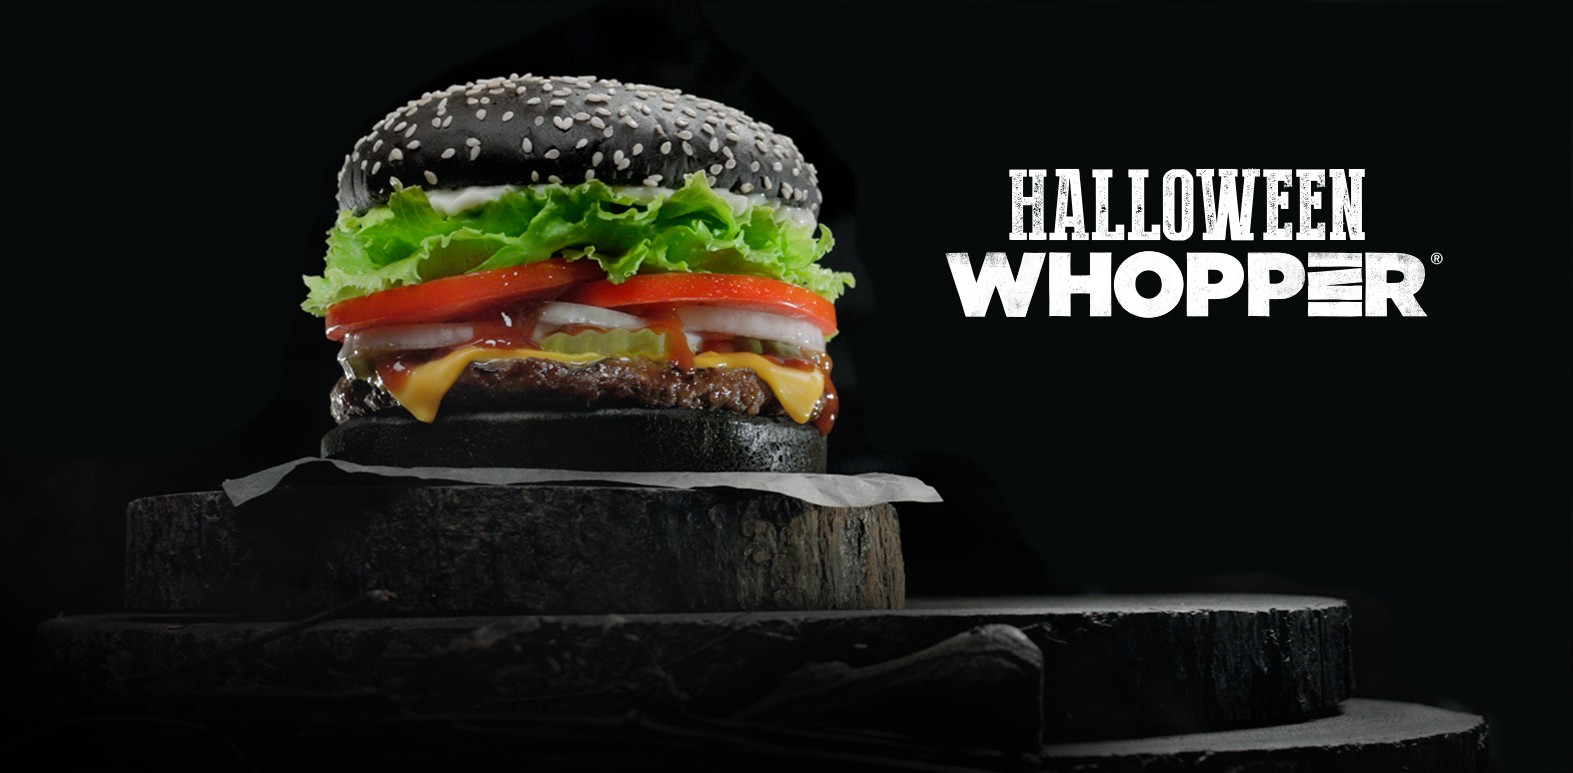 Halloween Whopper Burger king